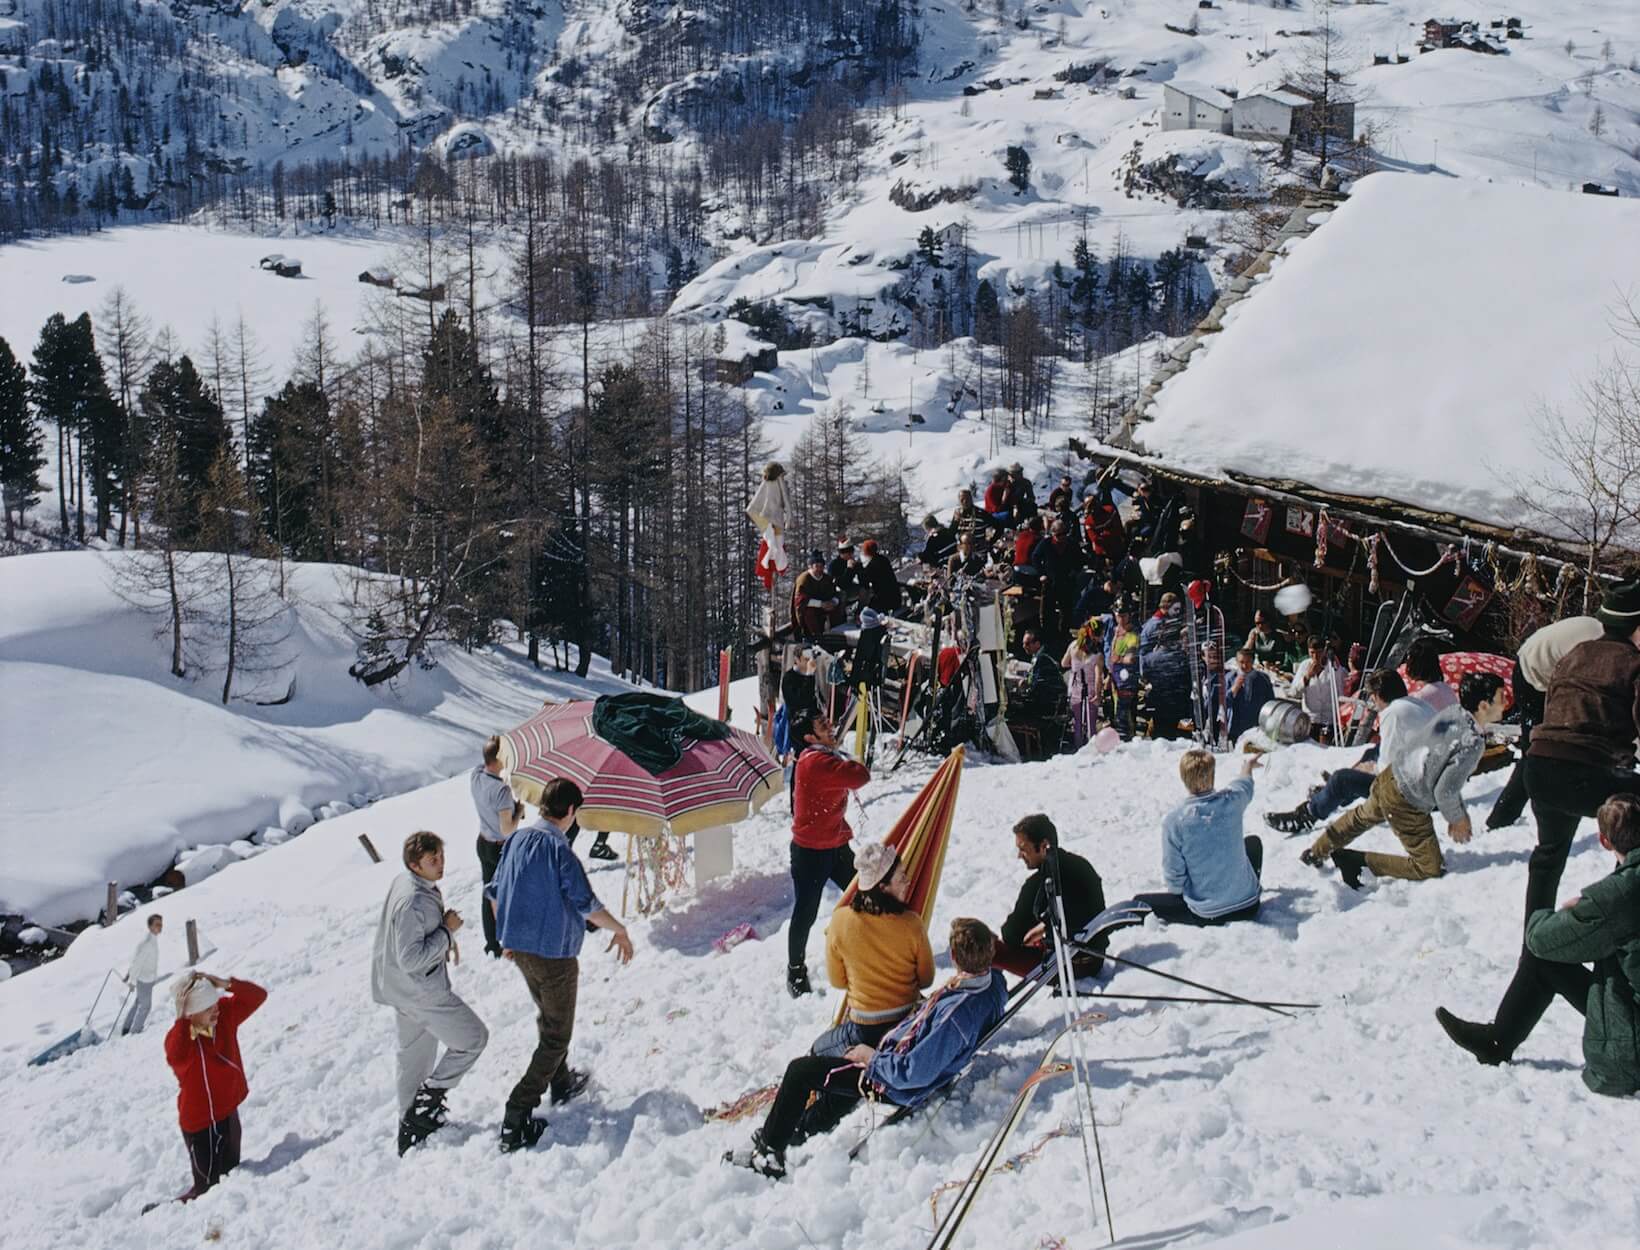 Three Après-Ski Looks for Your Winter Break